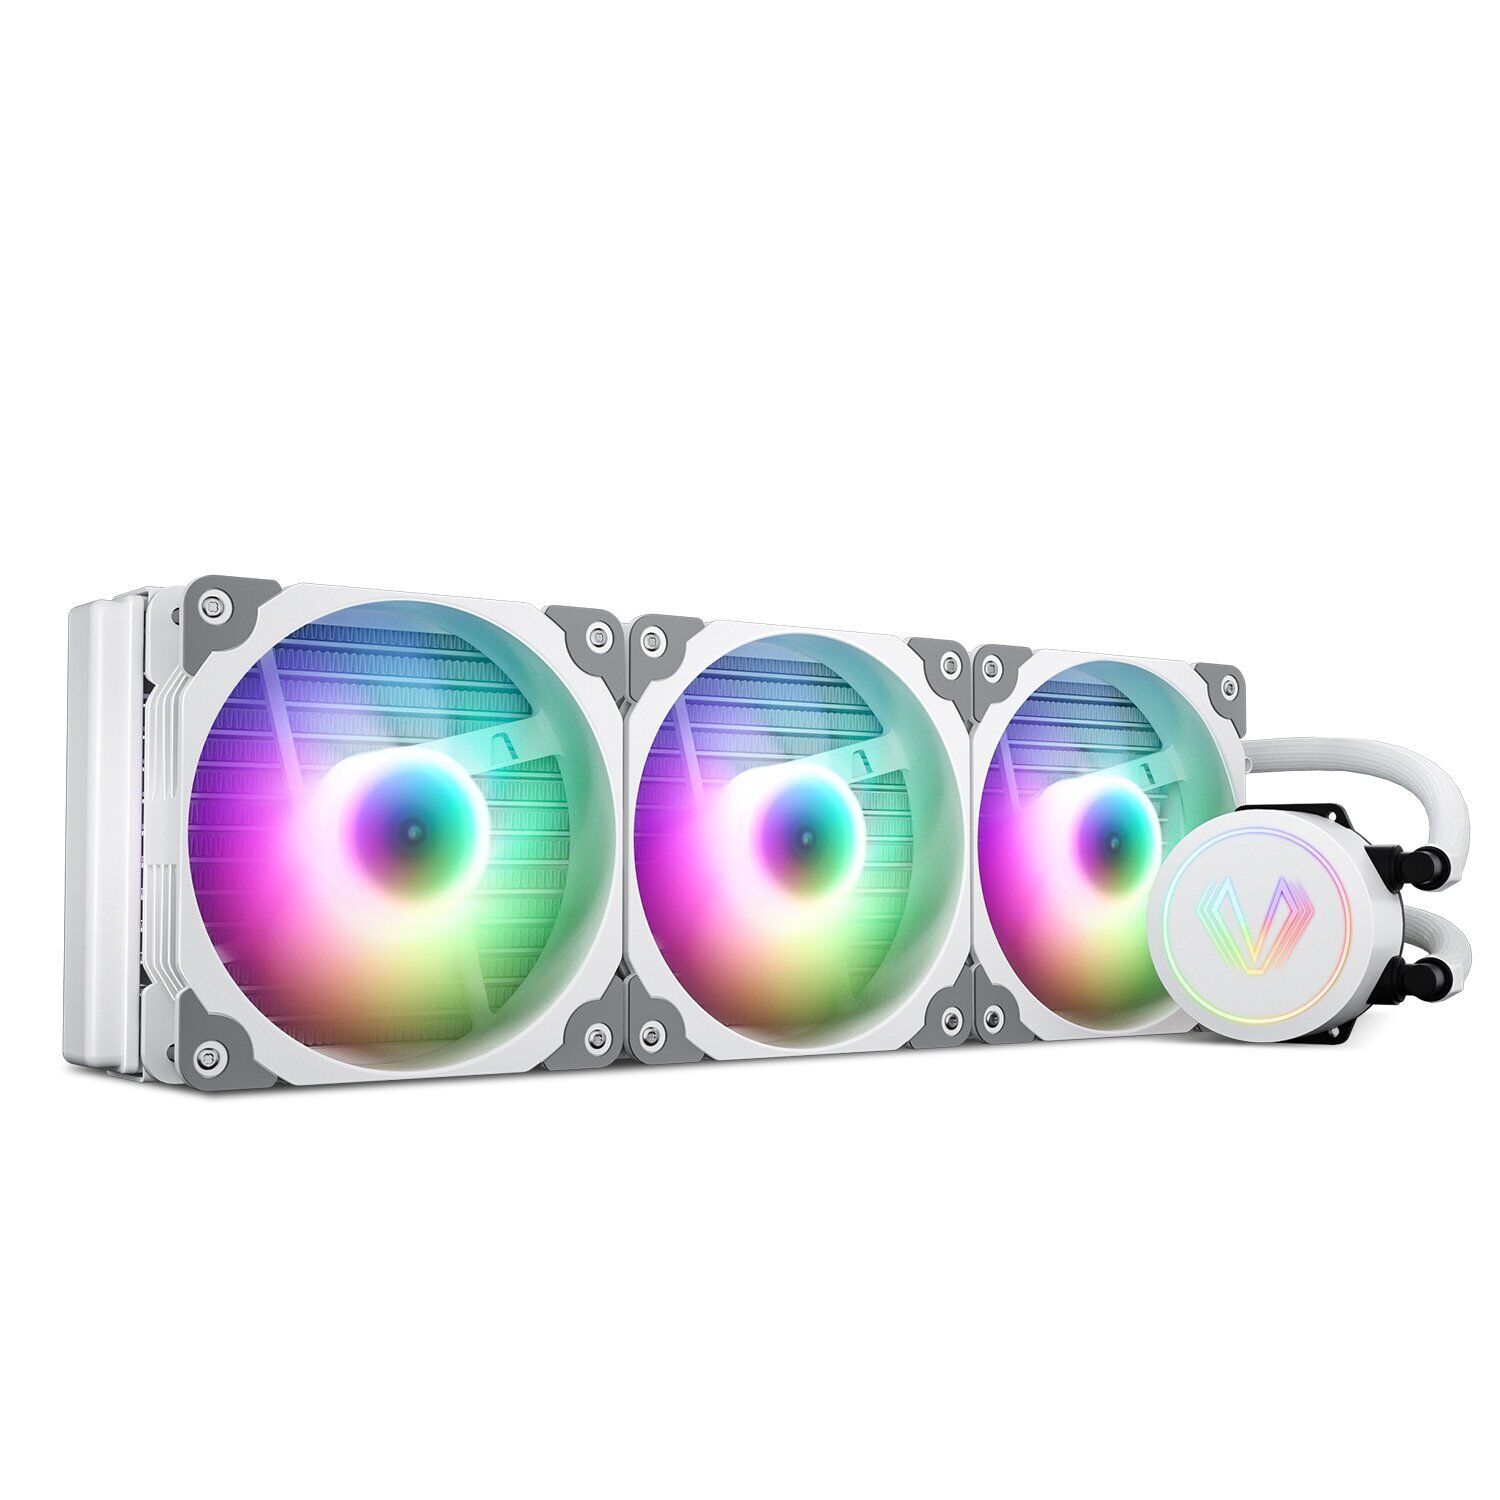 Vetroo V360 White ARGB Computer CPU Liquid Cooler 360mm Radiator For AMD AM4